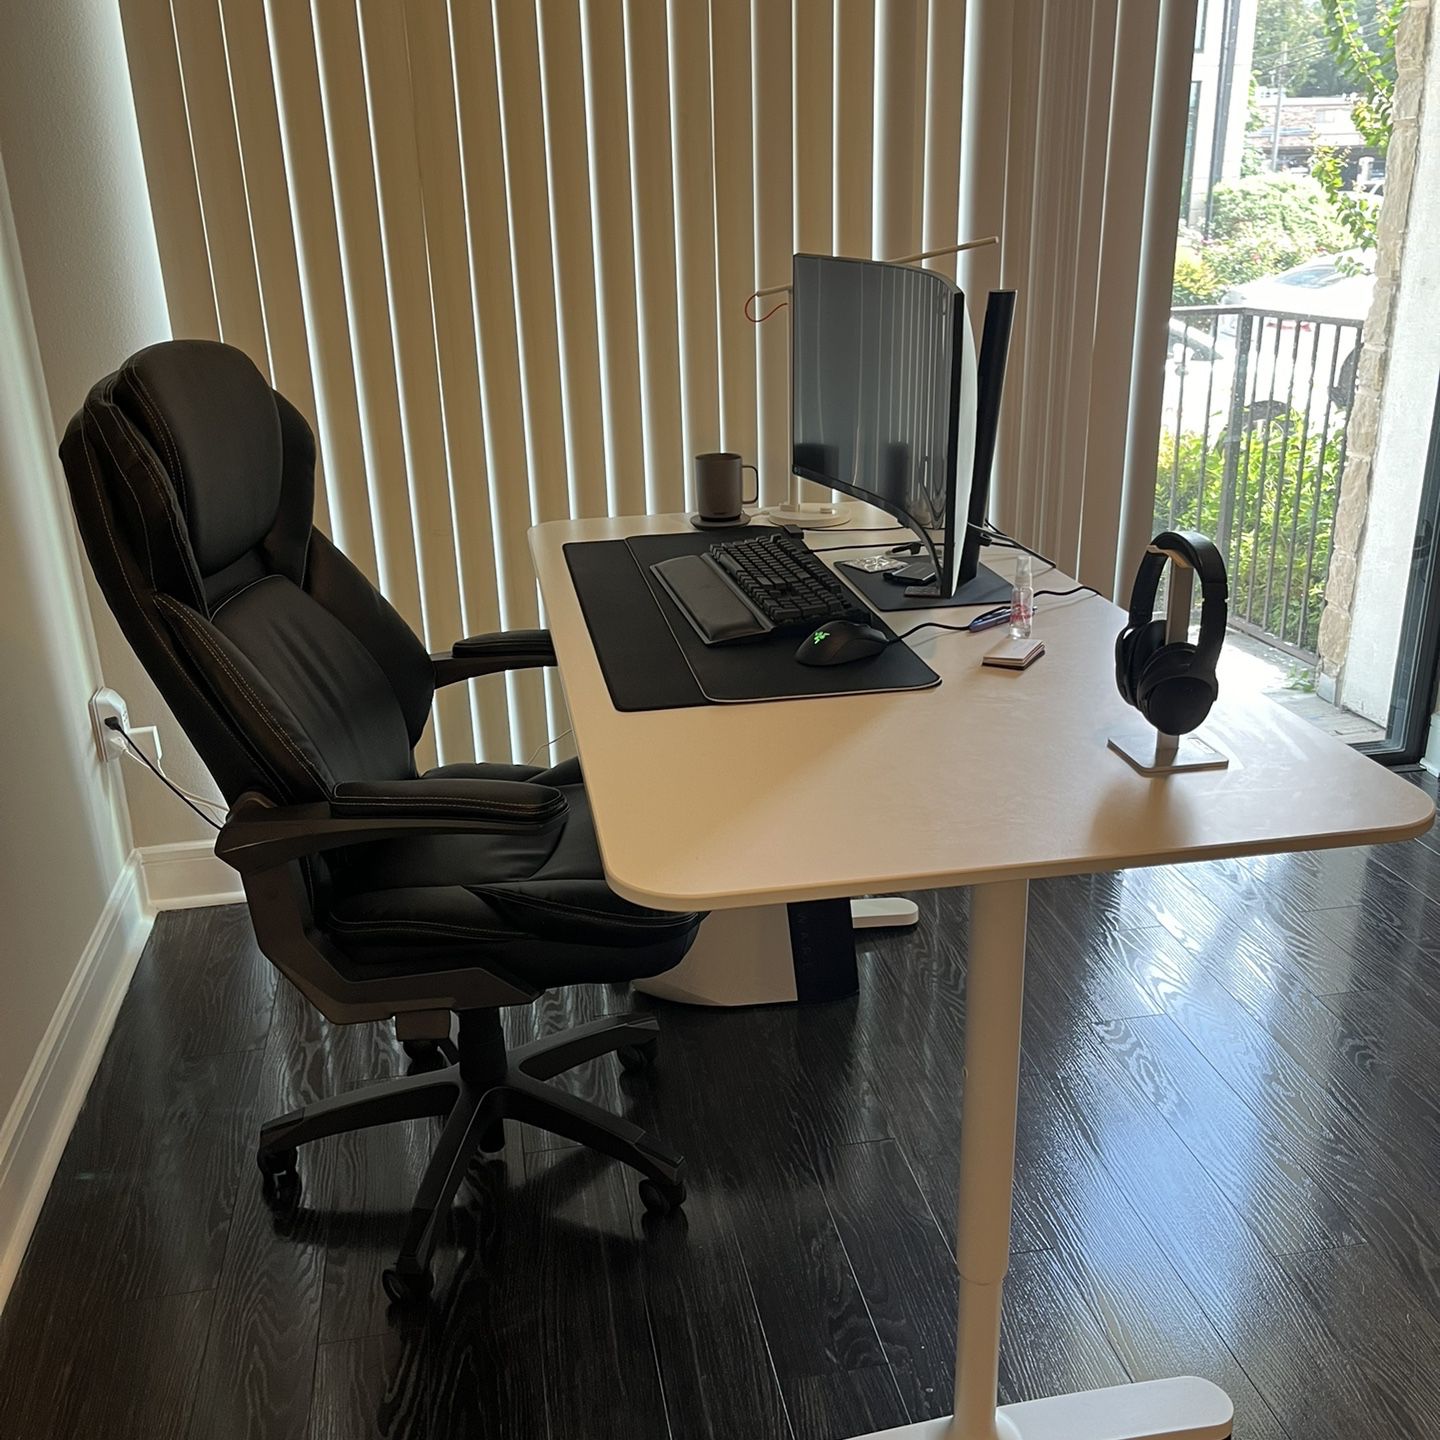 IKEA (BEKANT) Desk & Chair (LazyBoy)